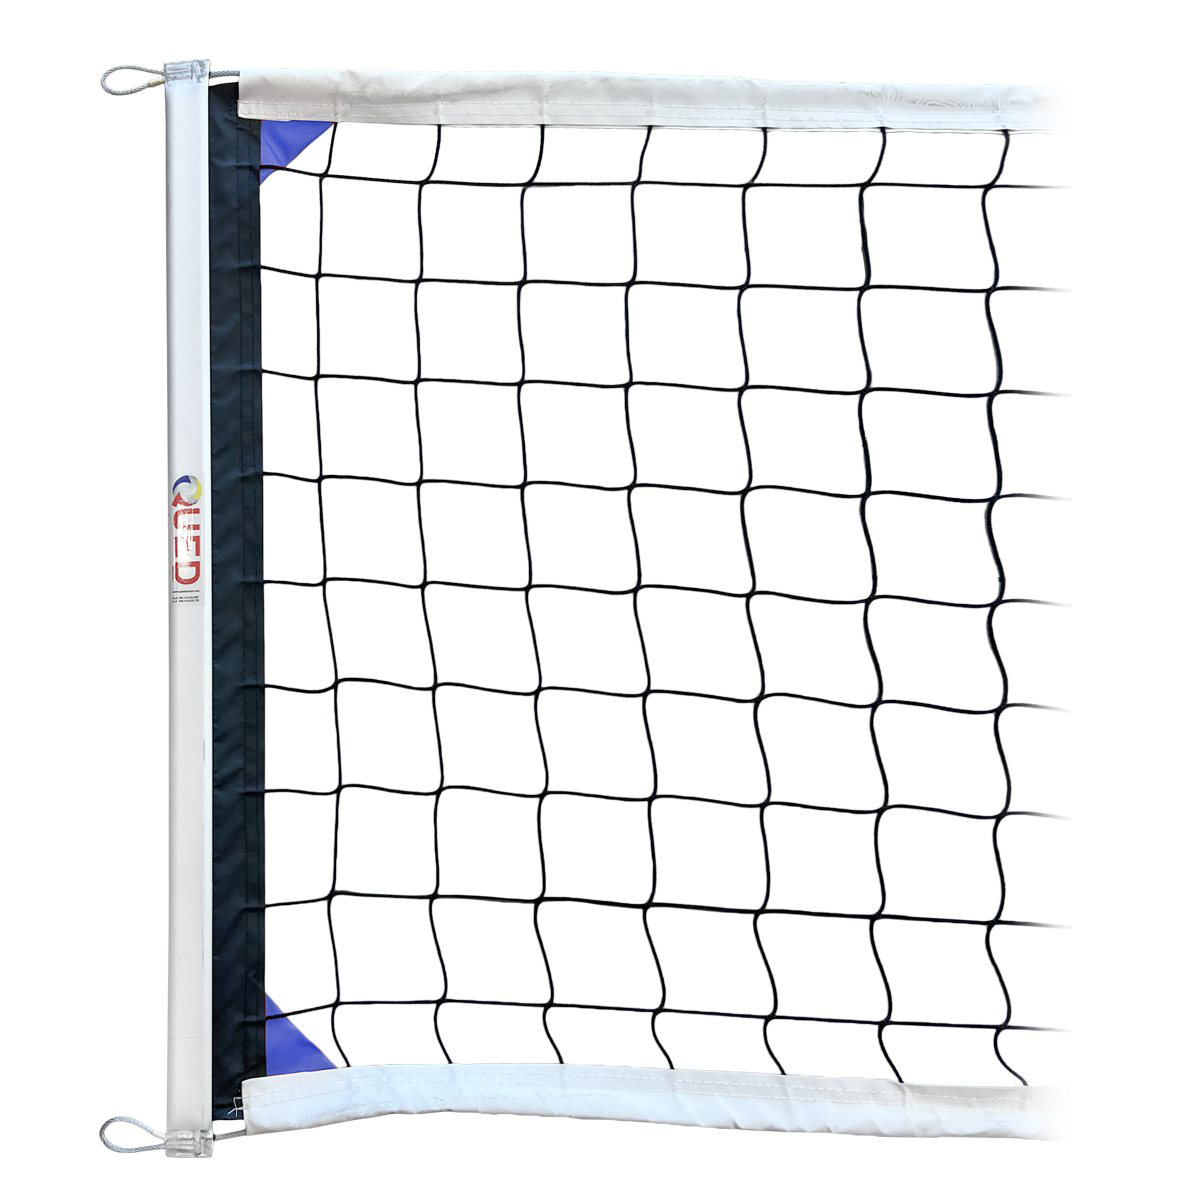 Volleyball net, 1 piece, aluminum sided, 30'